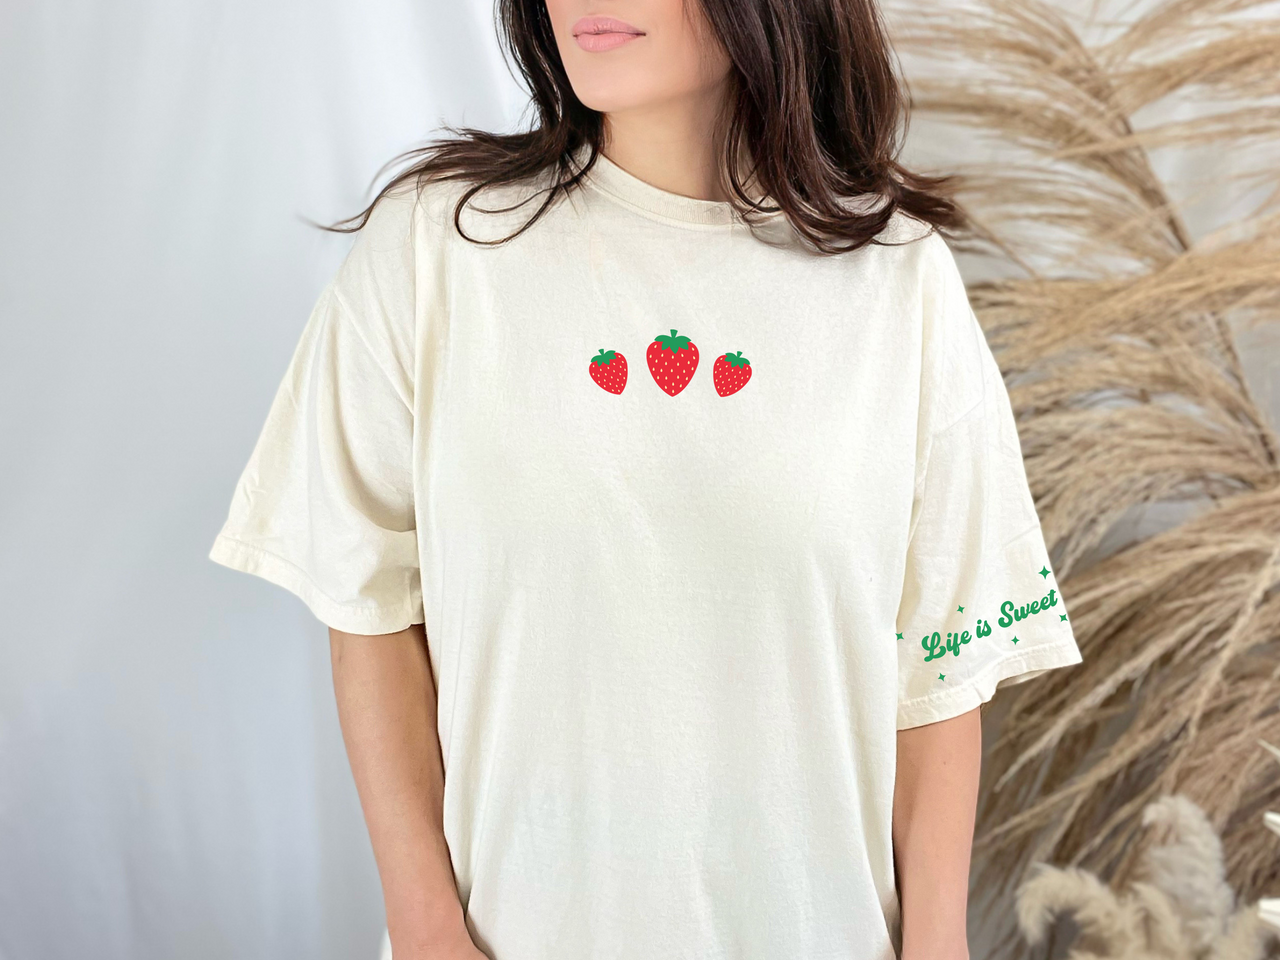 Strawberry "Life is Sweet" Oversized T Shirt